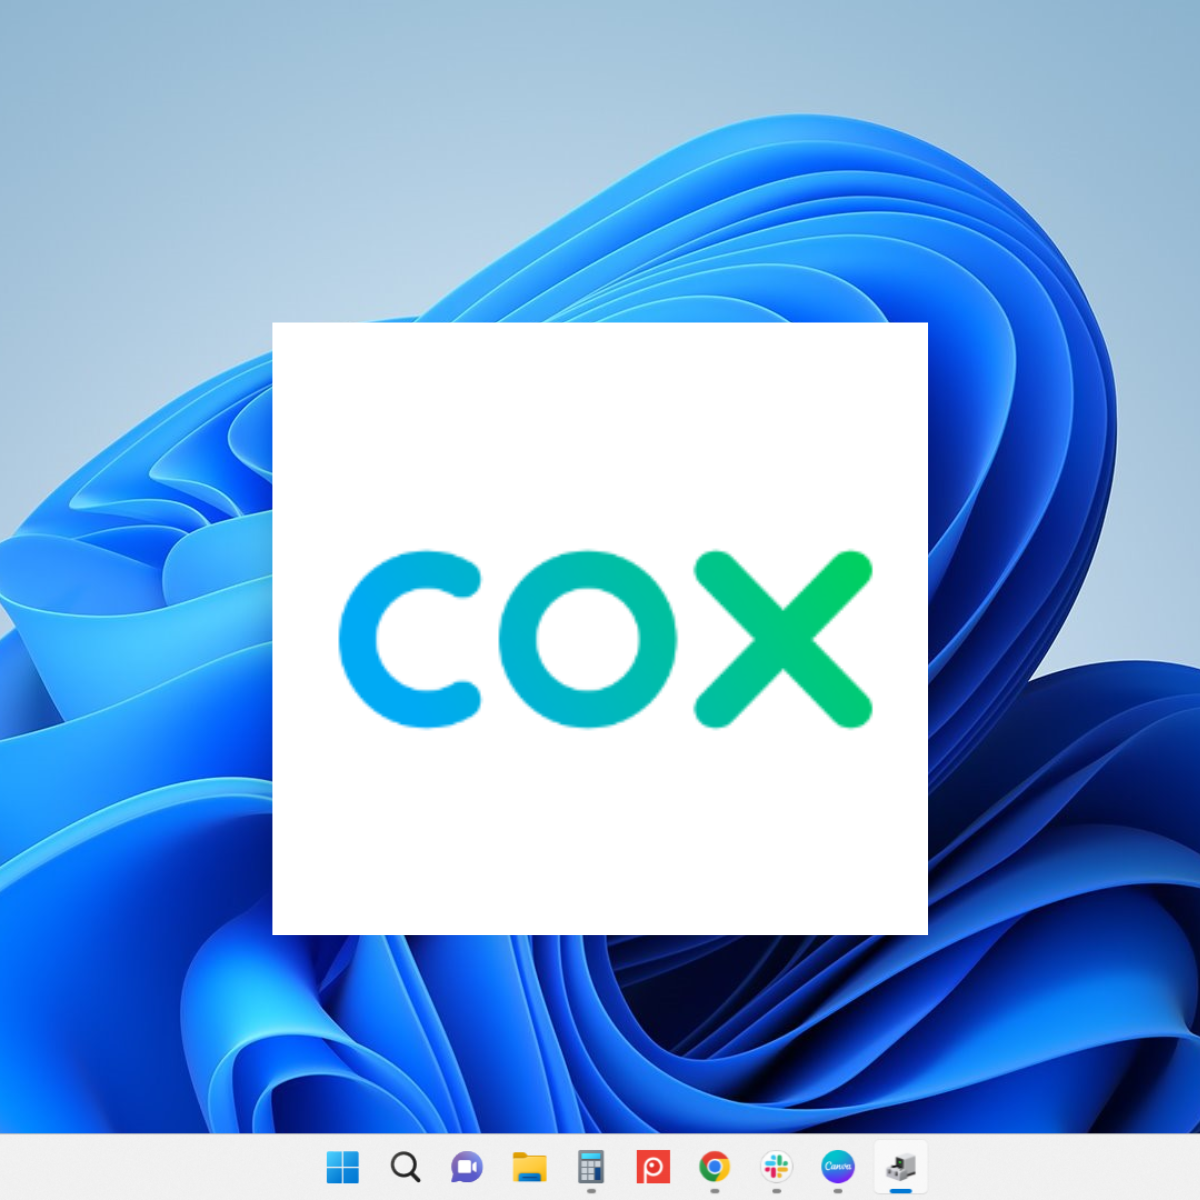 7 tapaa korjata Cox, kun se ei toimi [App, Wi-Fi, Cable]